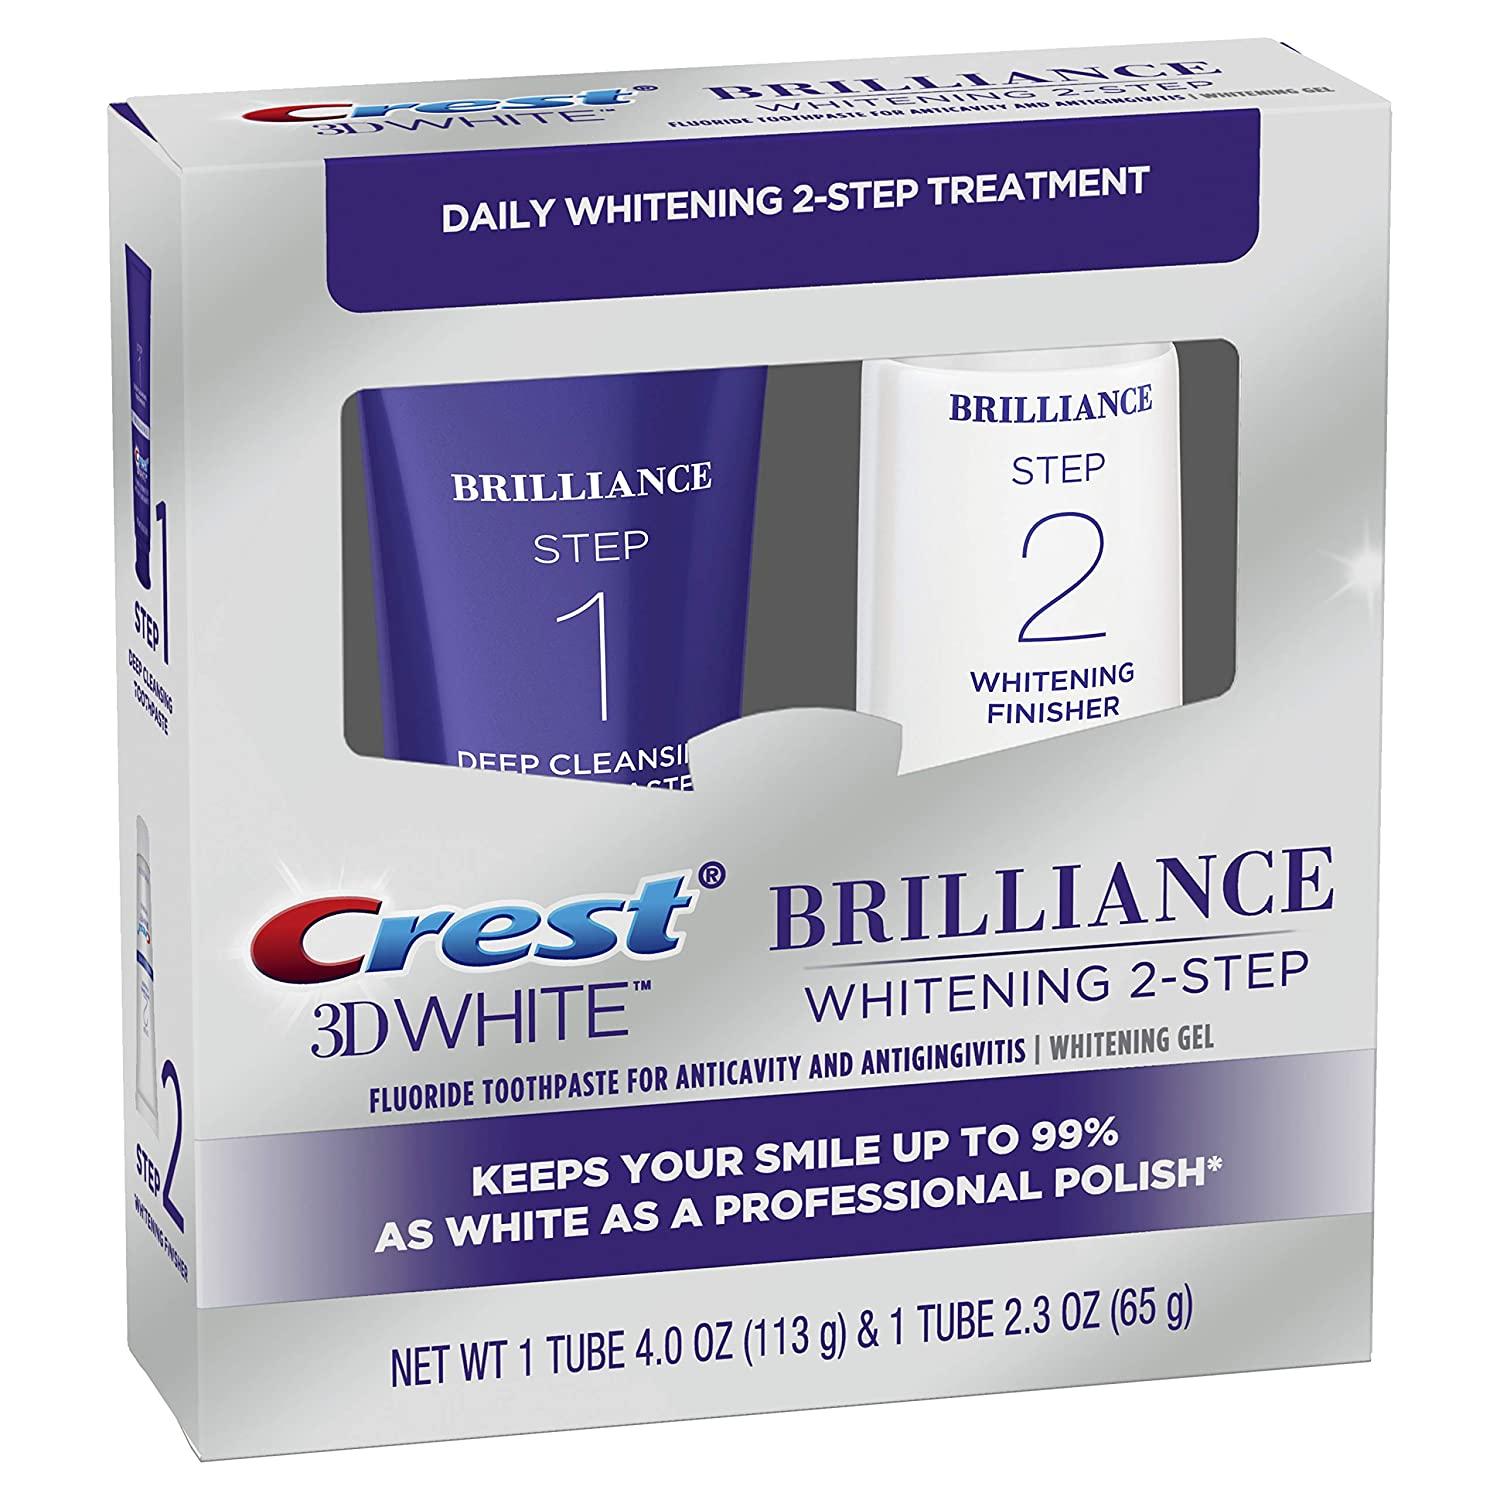 Crest 3D White Brilliance 2 Step Kit for $9.87 Shipped